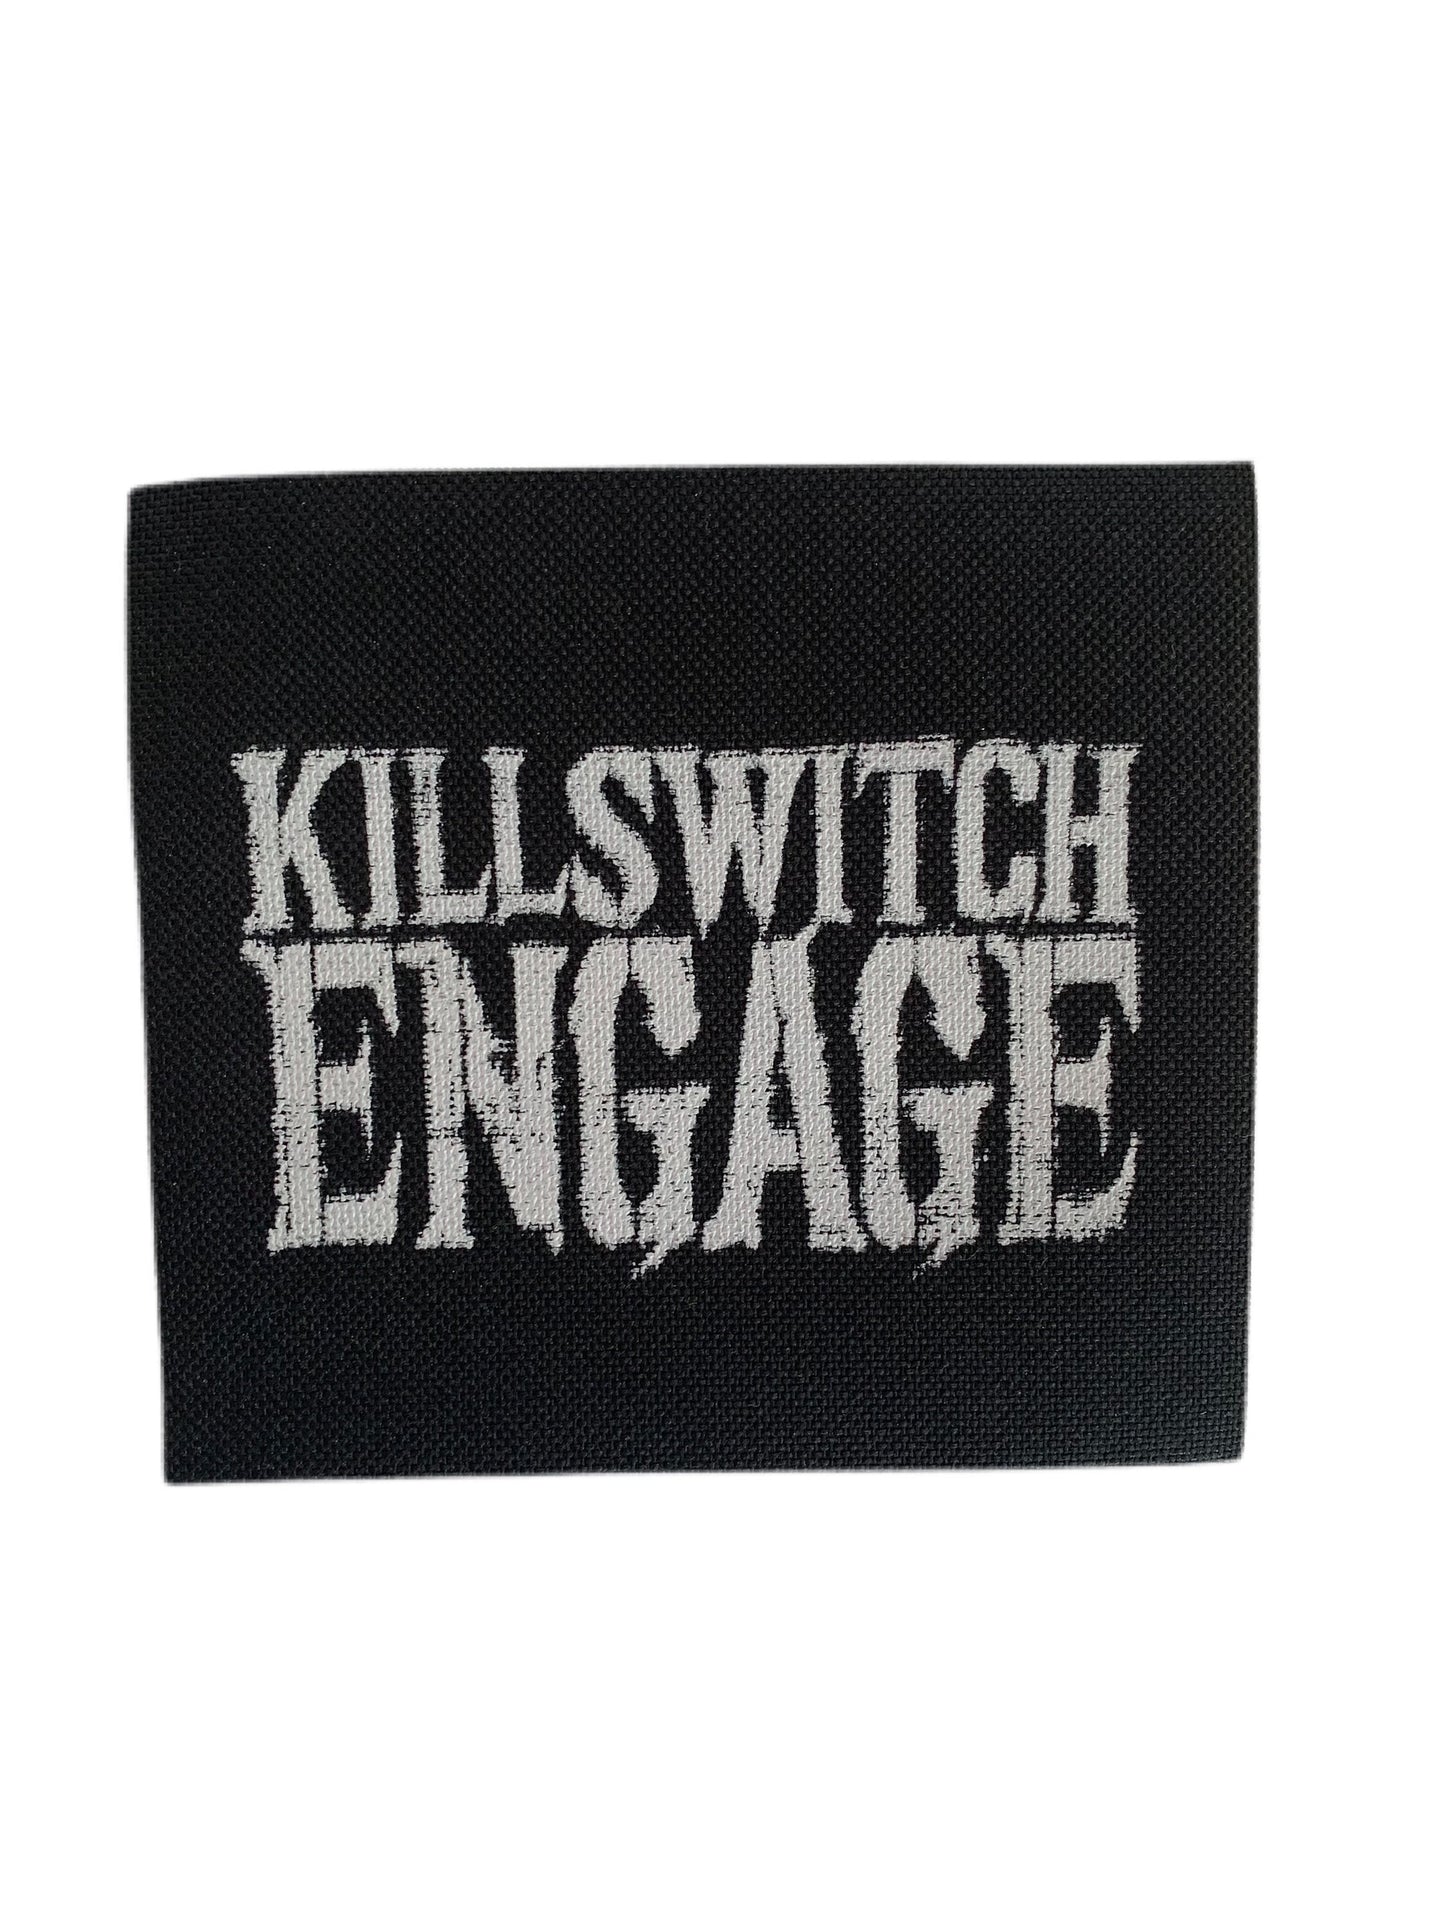 Killswitch Engage band patch